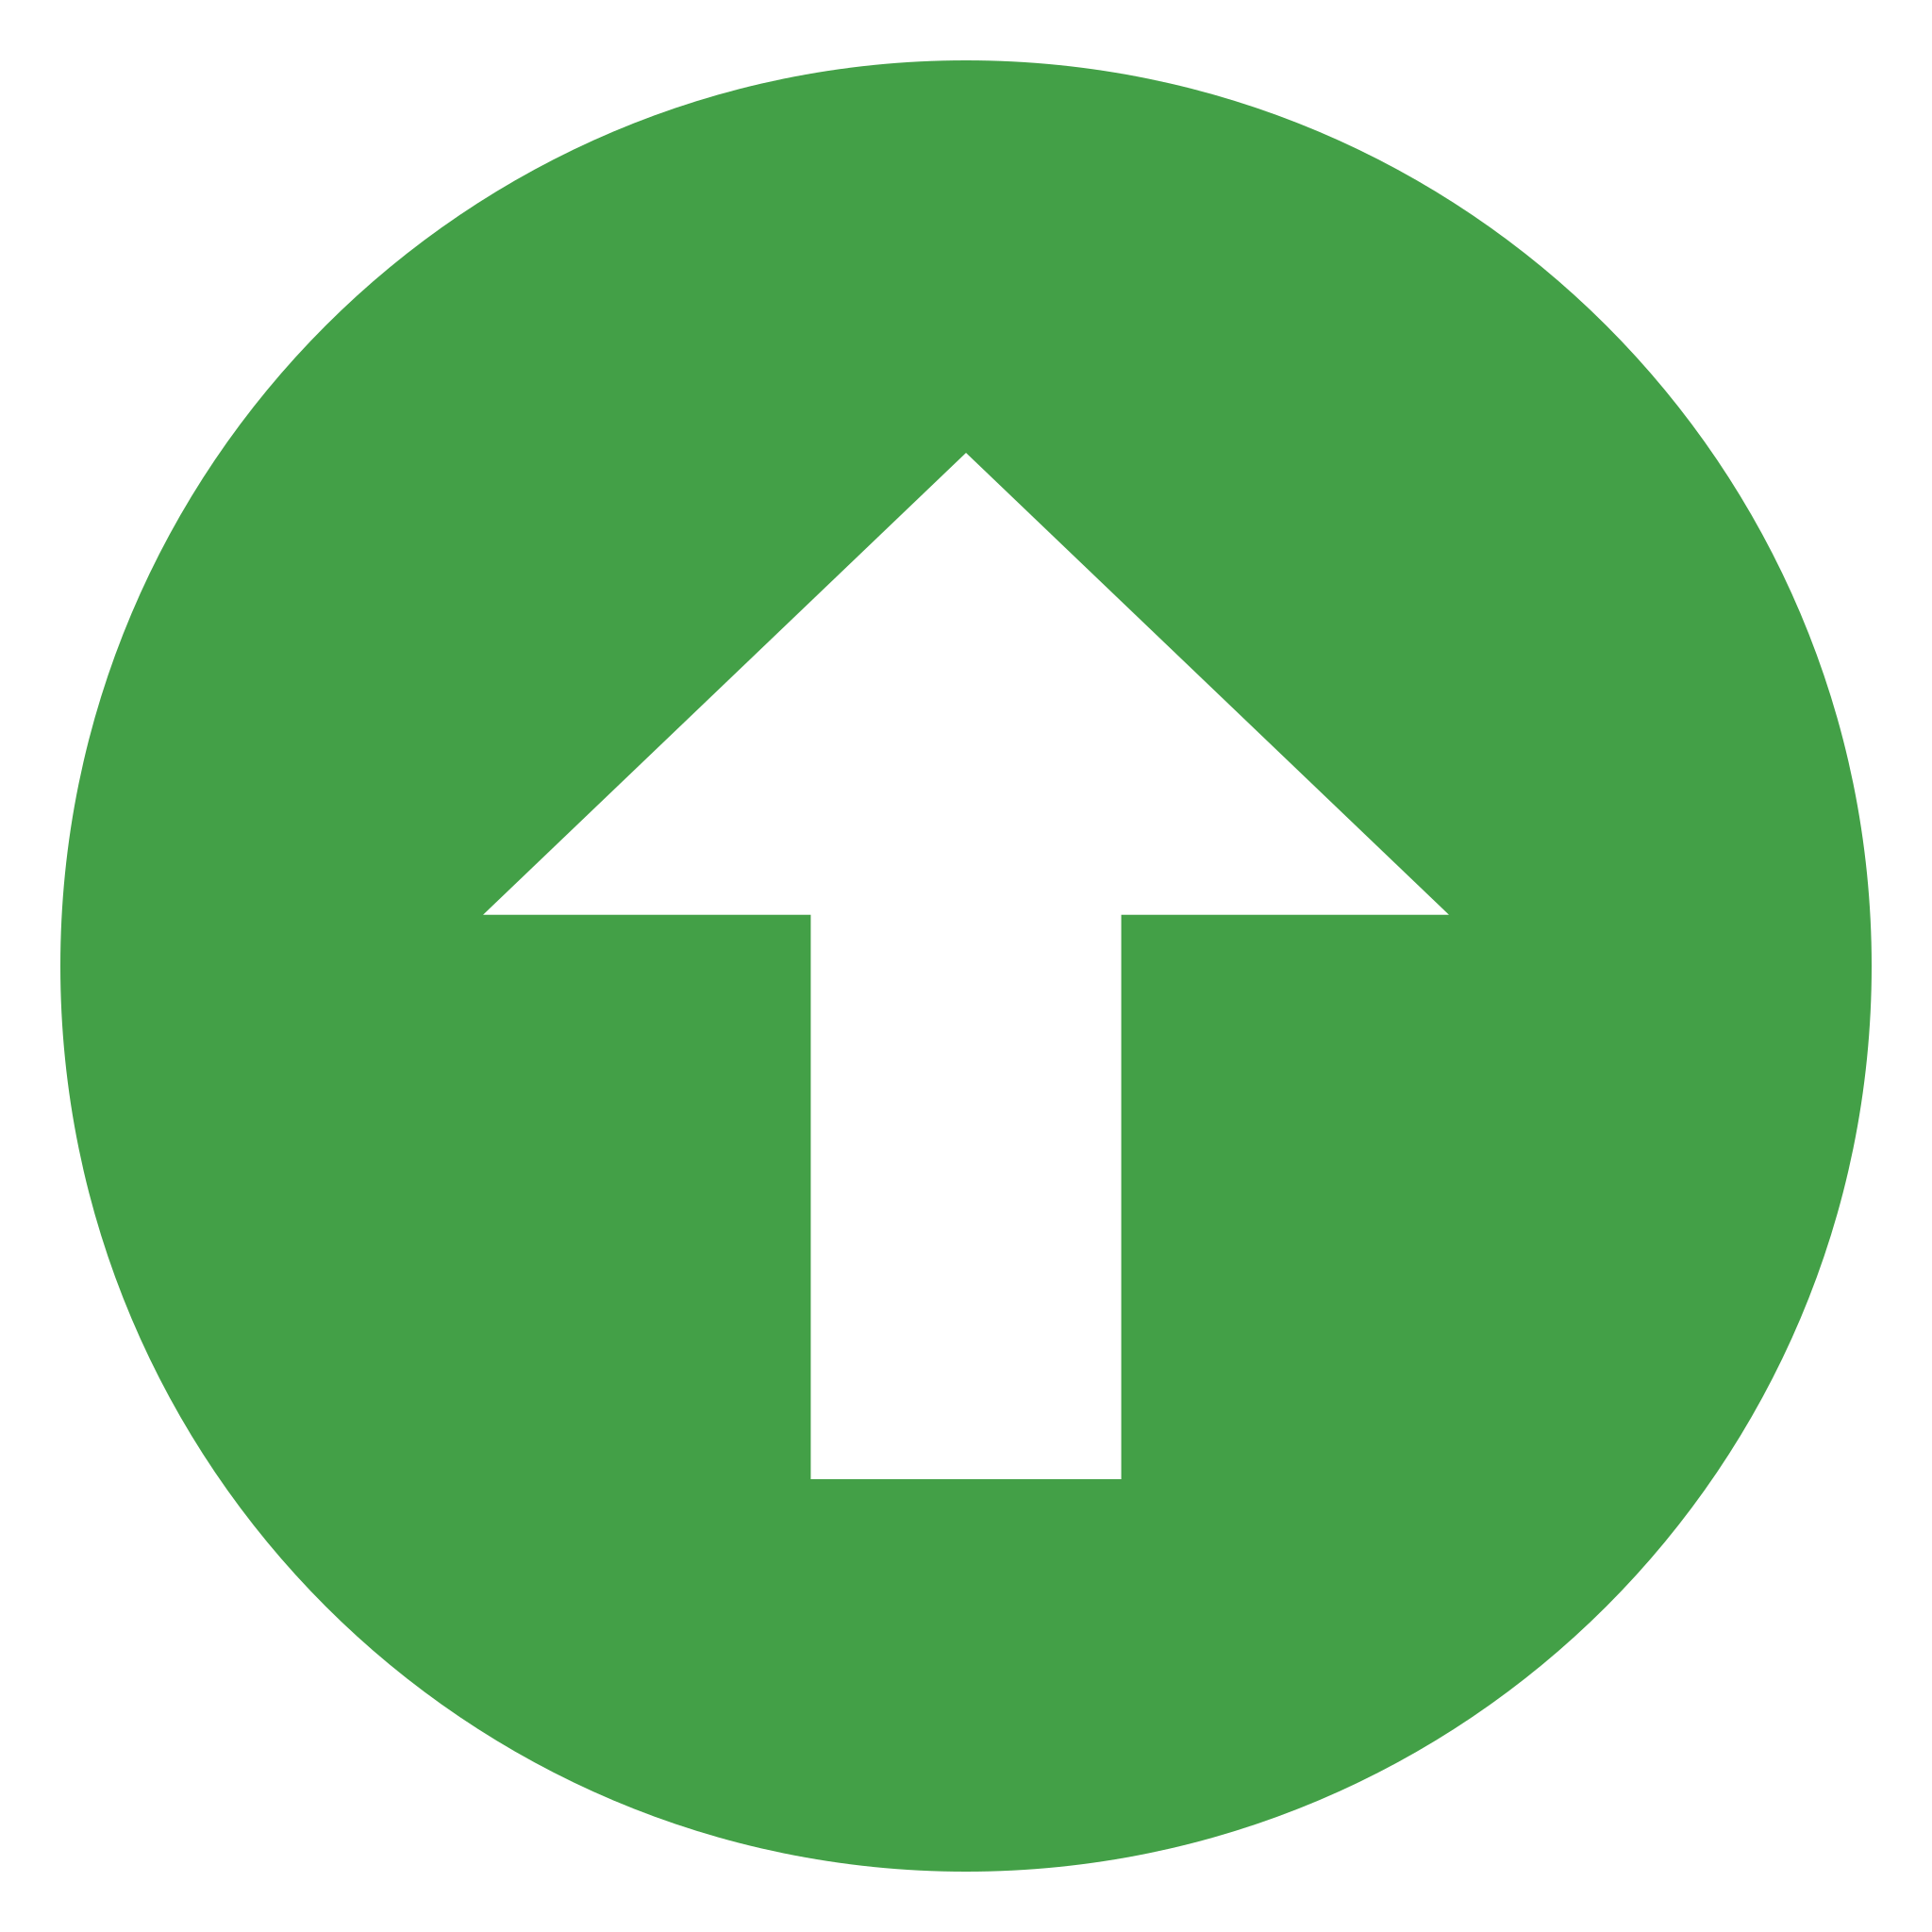 File:Eo circle green arrow-up.svg - Wikipedia